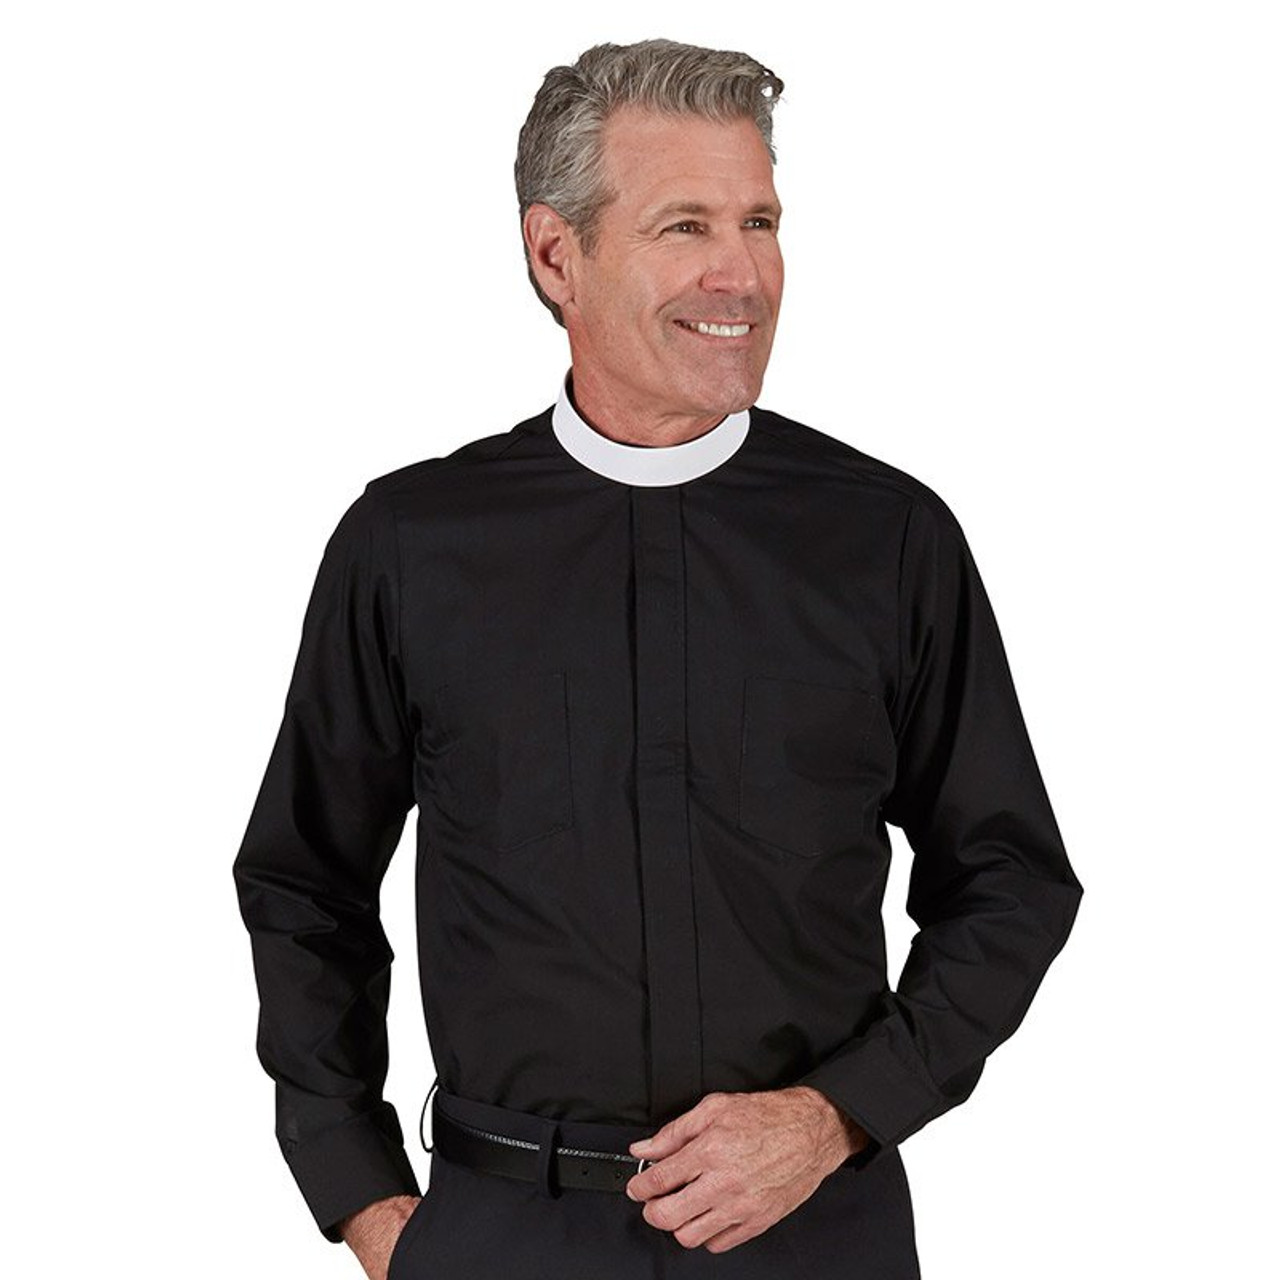 Clerical Shirt Neckband Collar Black Size 19.5-36/37